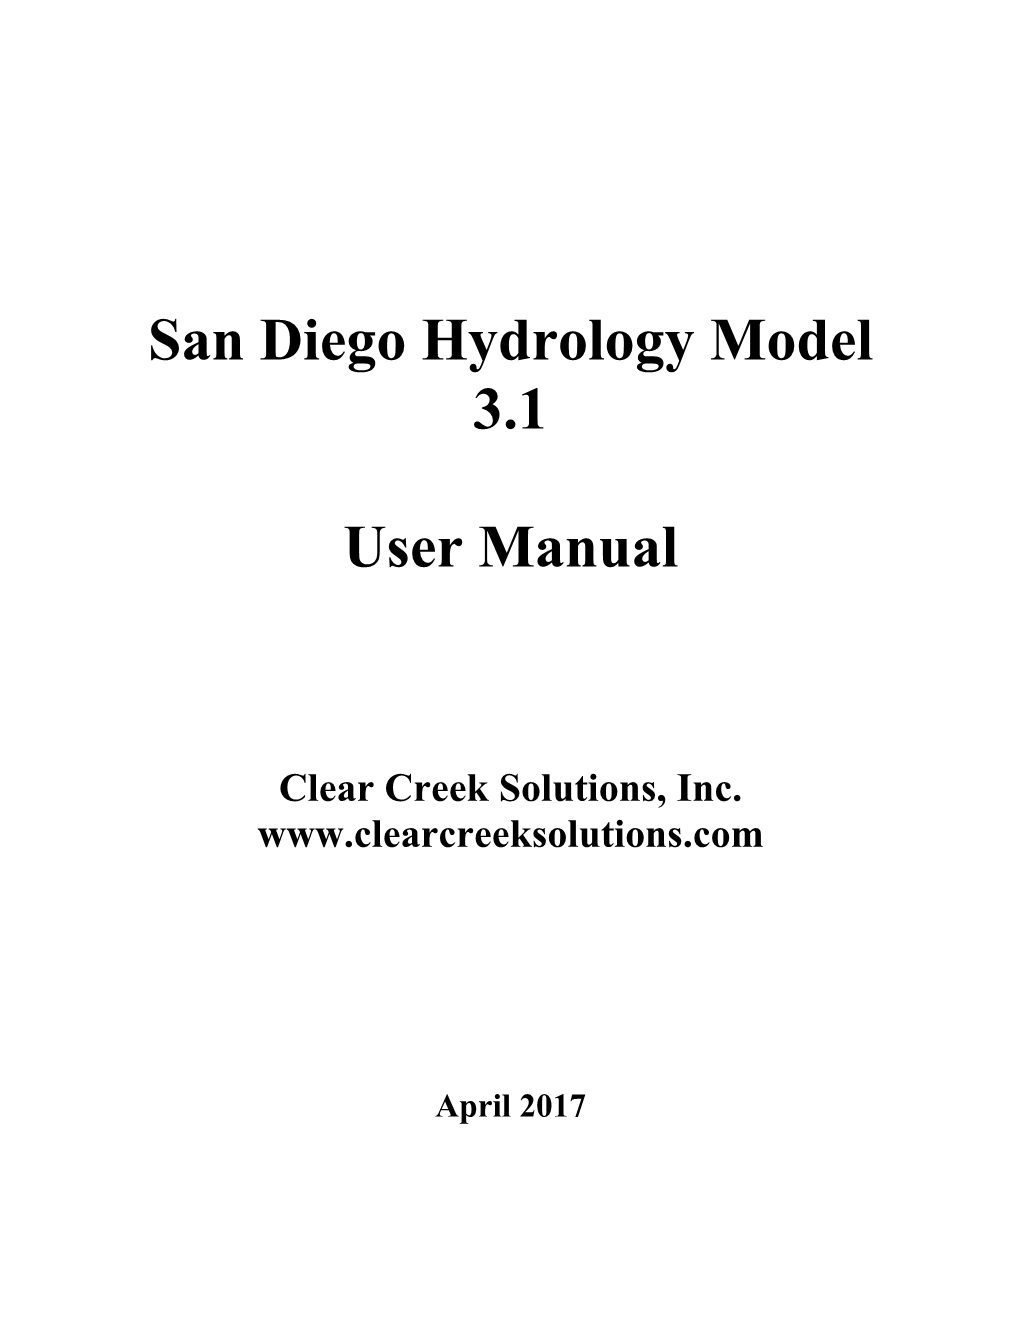 San Diego Hydrology Model 3.1 User Manual – April 2017